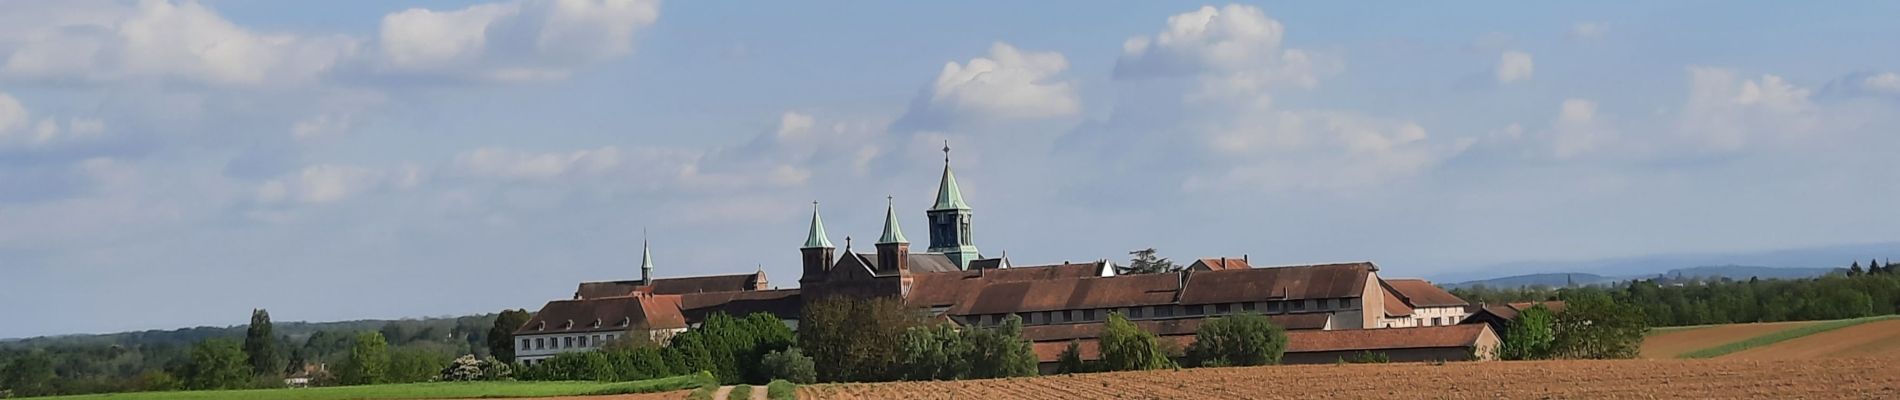 Tour Wandern Reiningen - abbaye de l'Oelenberg   Reiningue - Photo